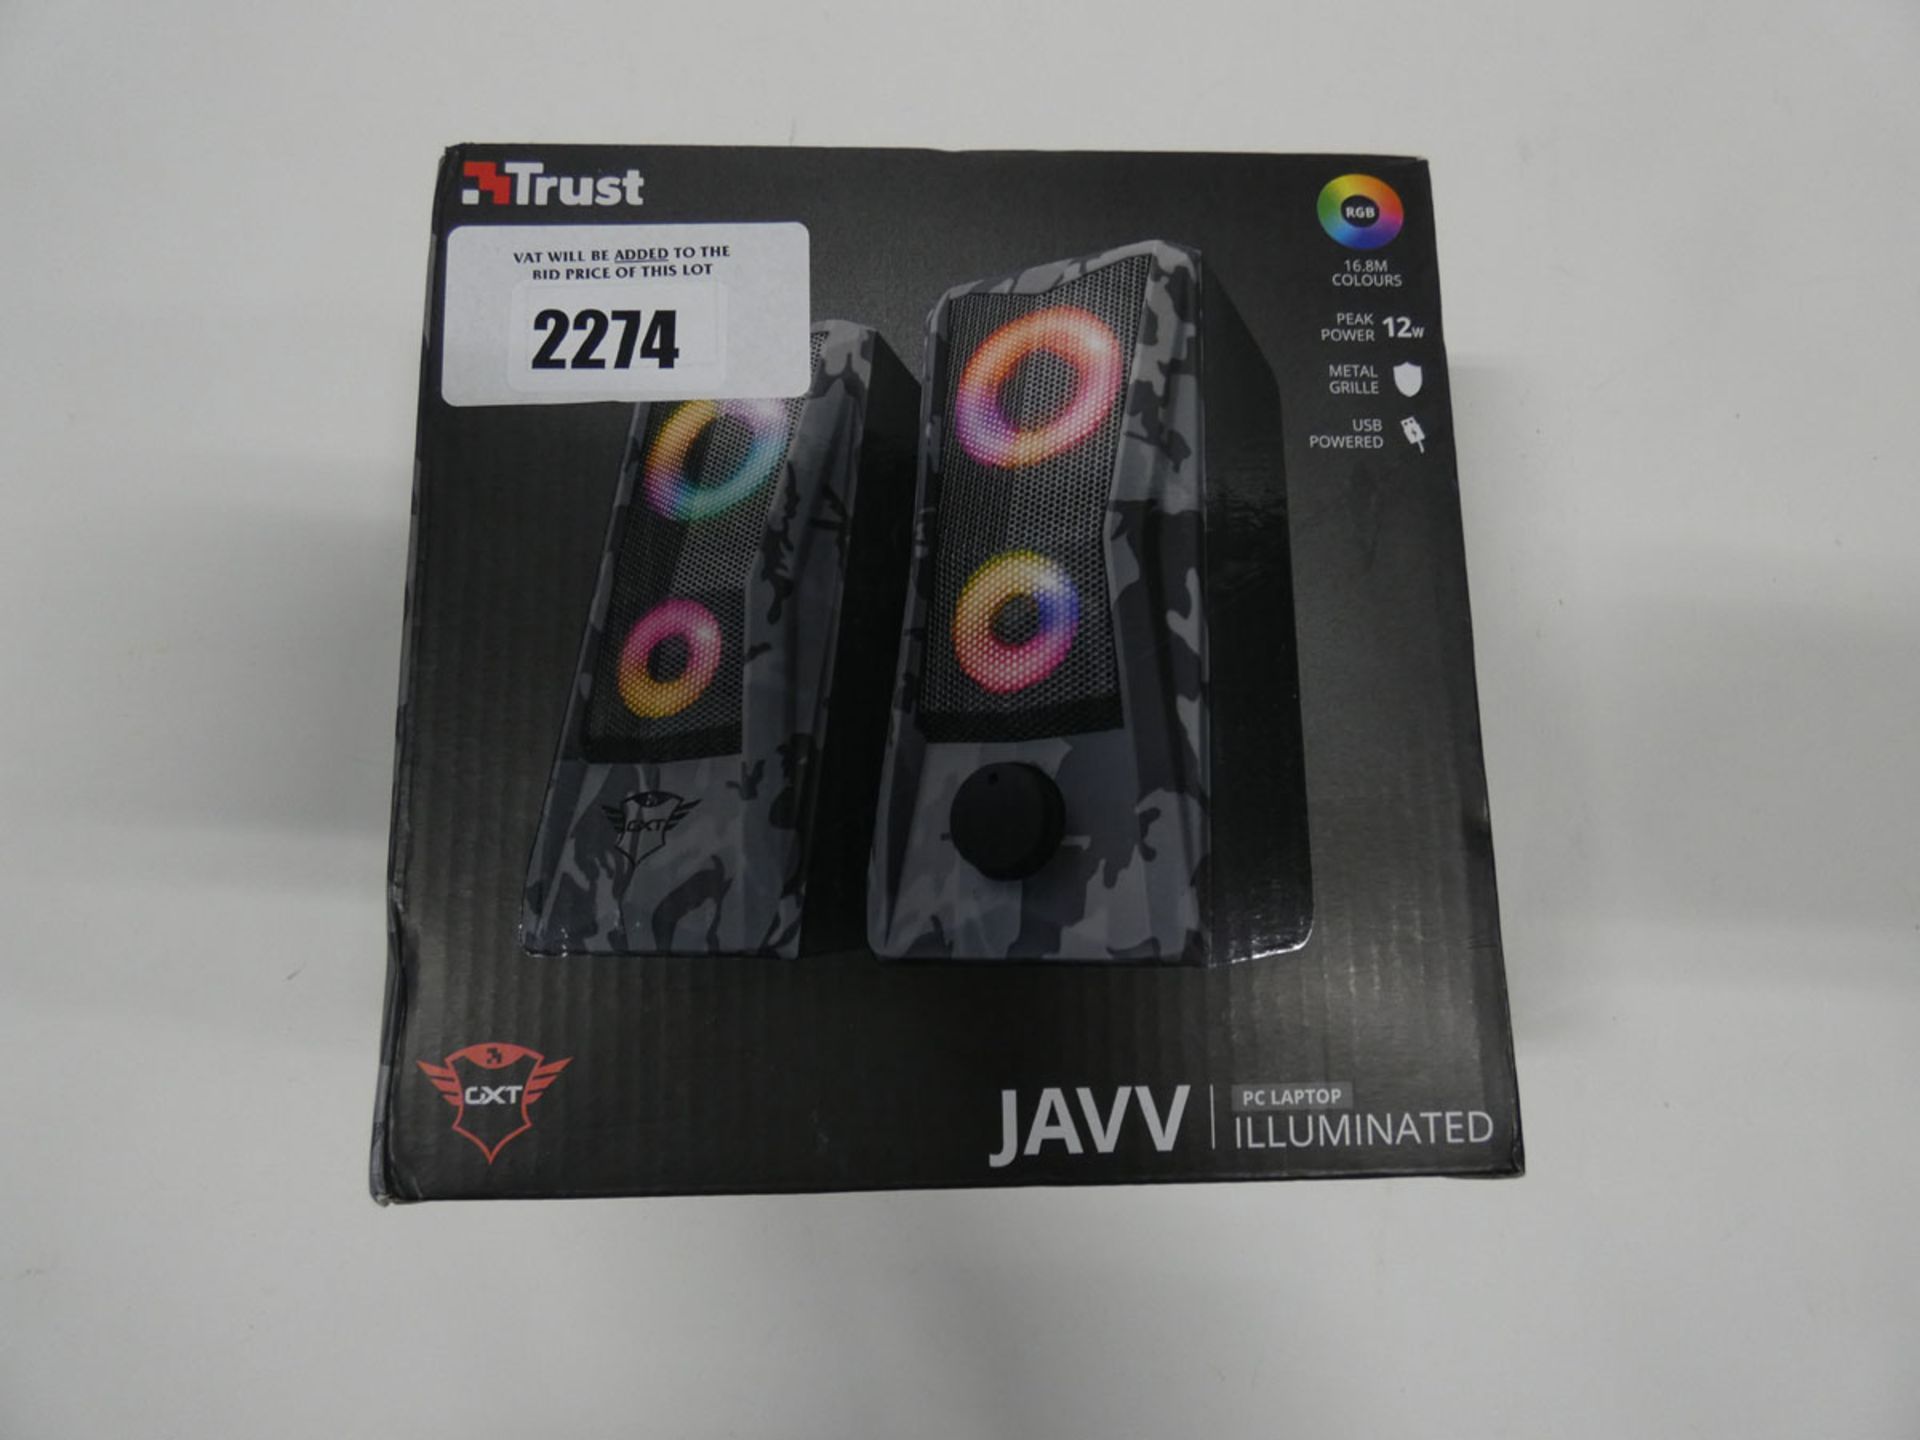 Trust Javv Illuminated speakers